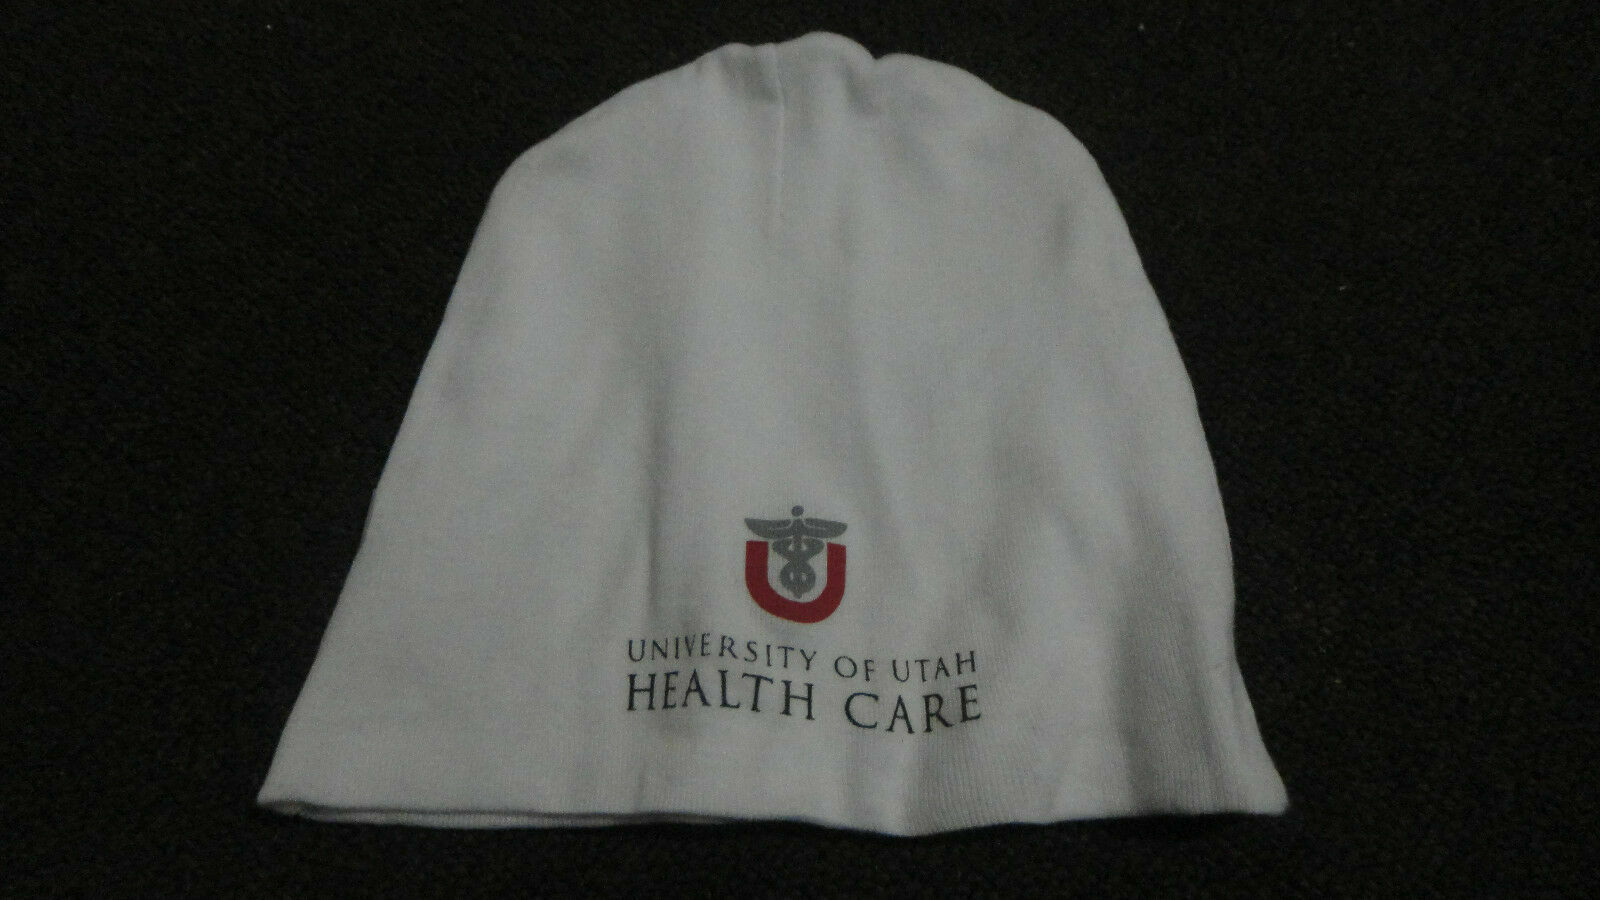 12 NEW INFANT BABY RIB CAPS, RABBIT SKINS, WHITE, University Of Utah HEALTH CARE - $18.10